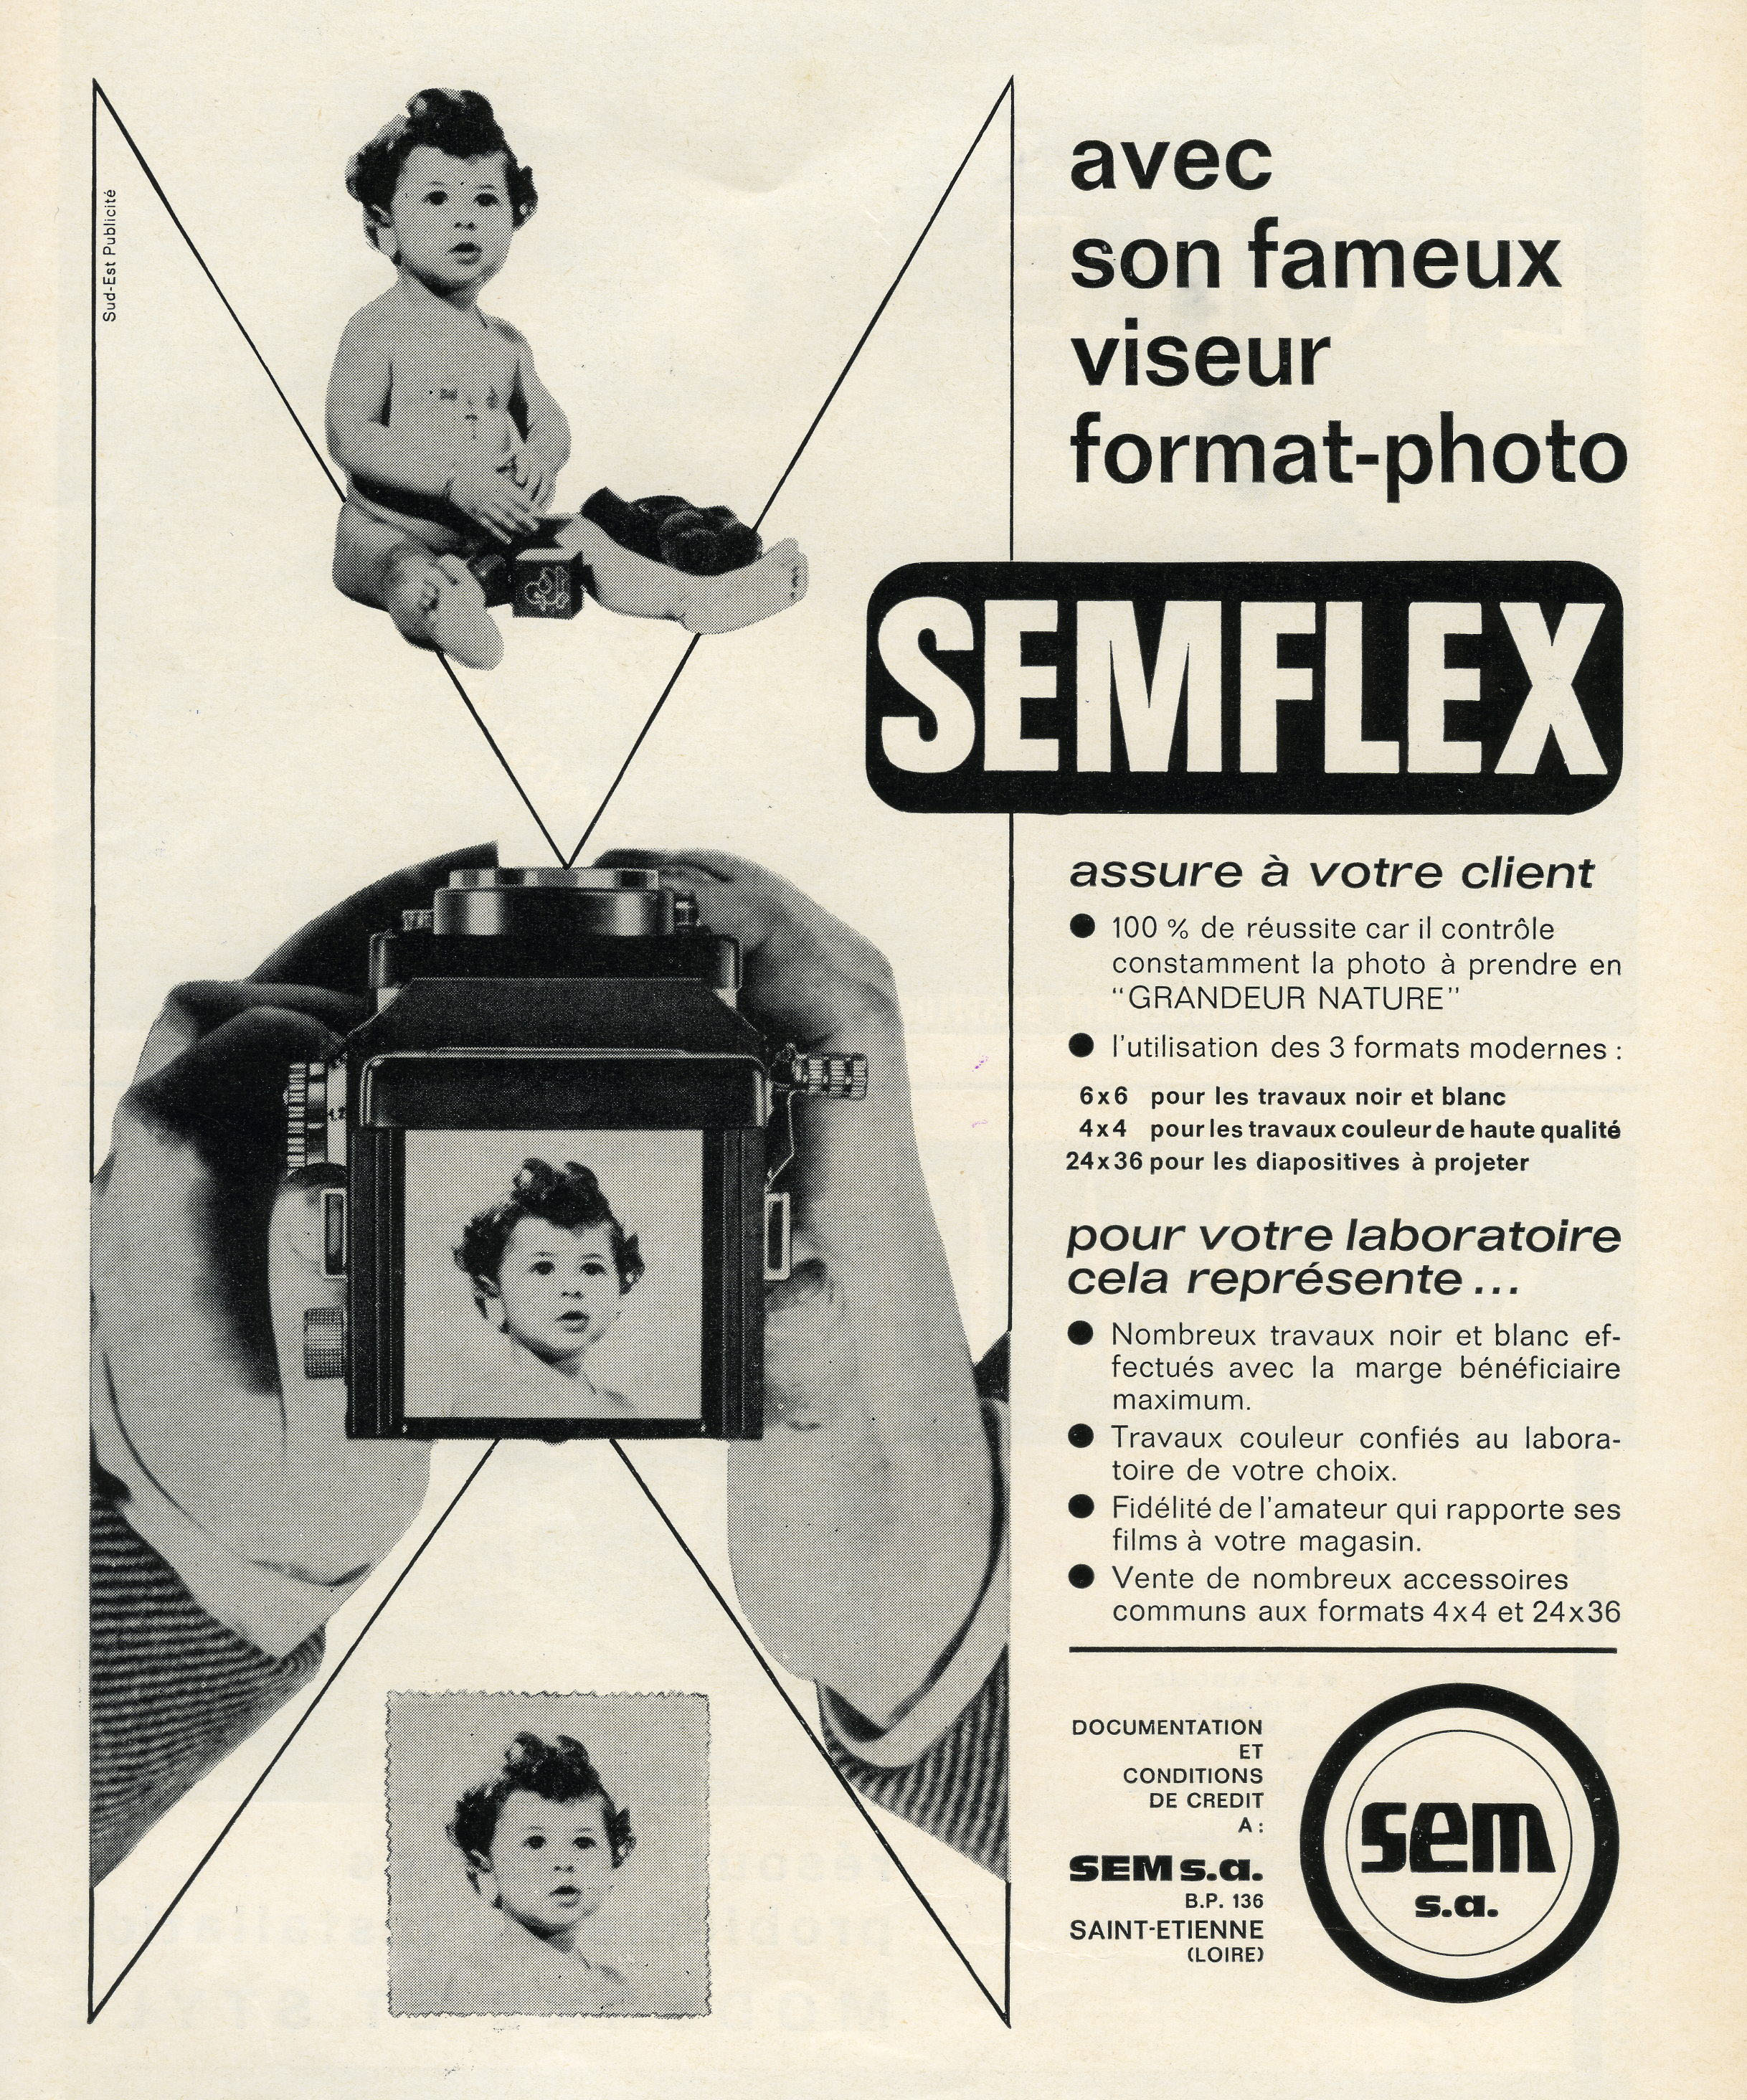 Wallpaper 1496-6  SEM  Semflex otomatic II, collection AMI Appareils photos